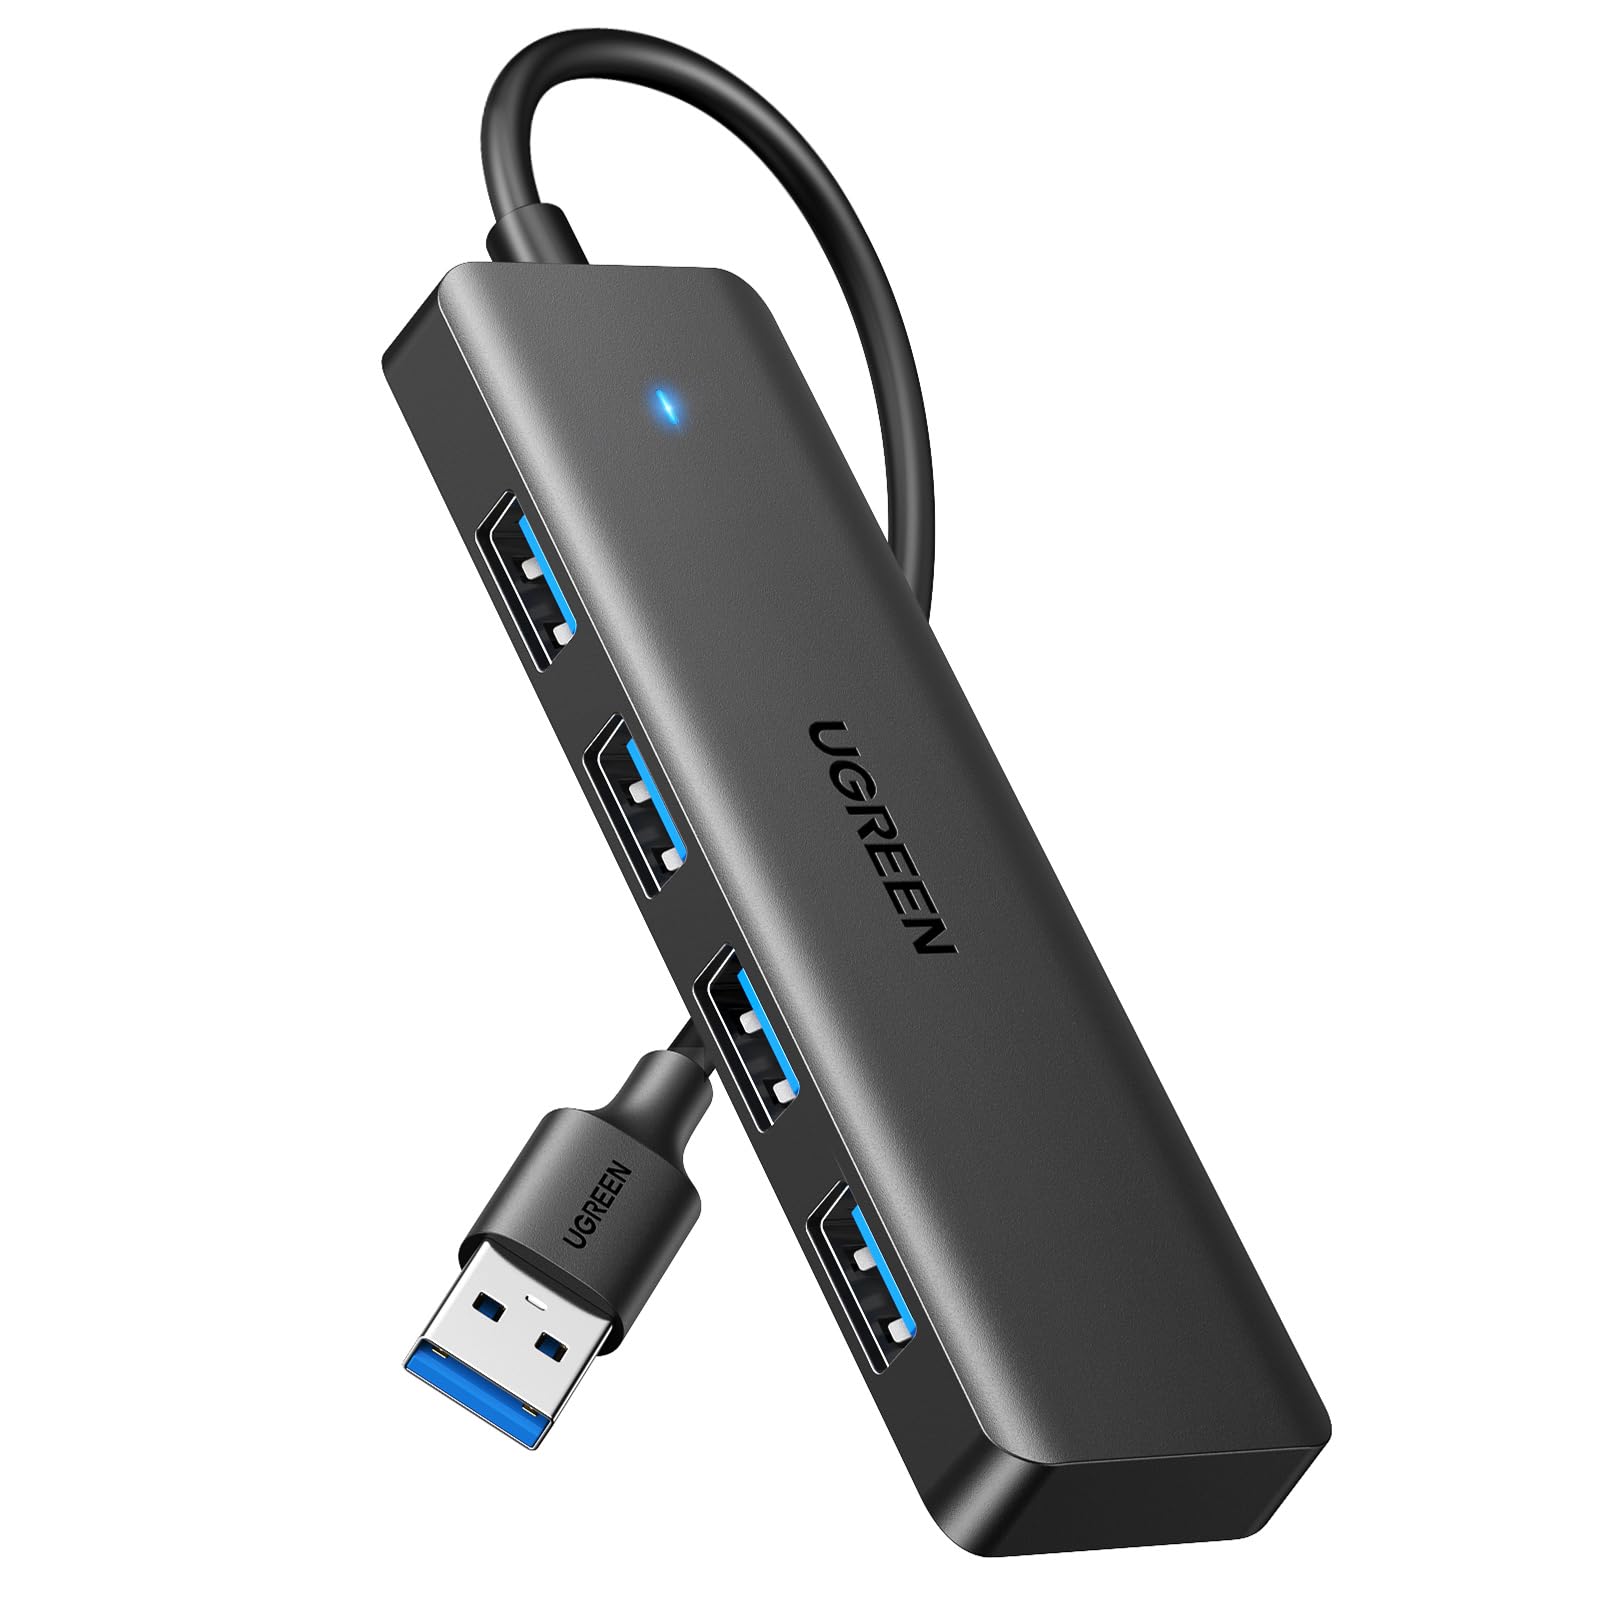 UGREEN USB 3.0 Hub, 4 Ports $6.99 & More + Free Shipping w/ Prime